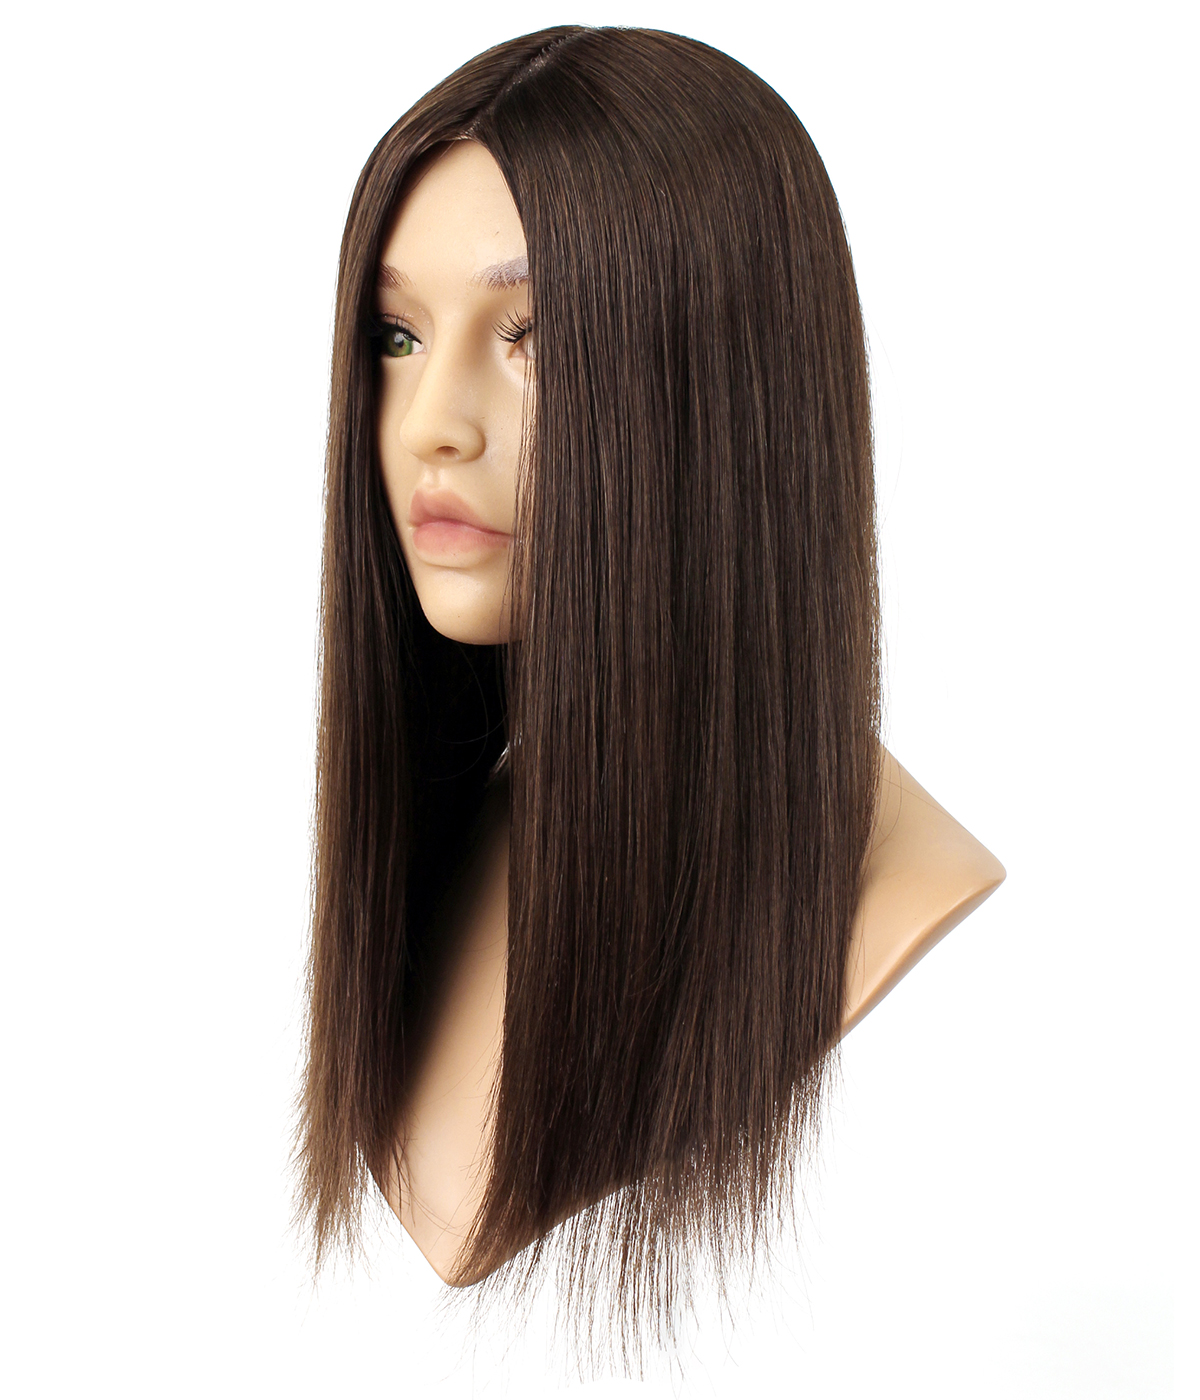  5.5" x 6" Full Skin Base Remy Human Hair Topper | Medium Density | Natural Looking Hair Parting  